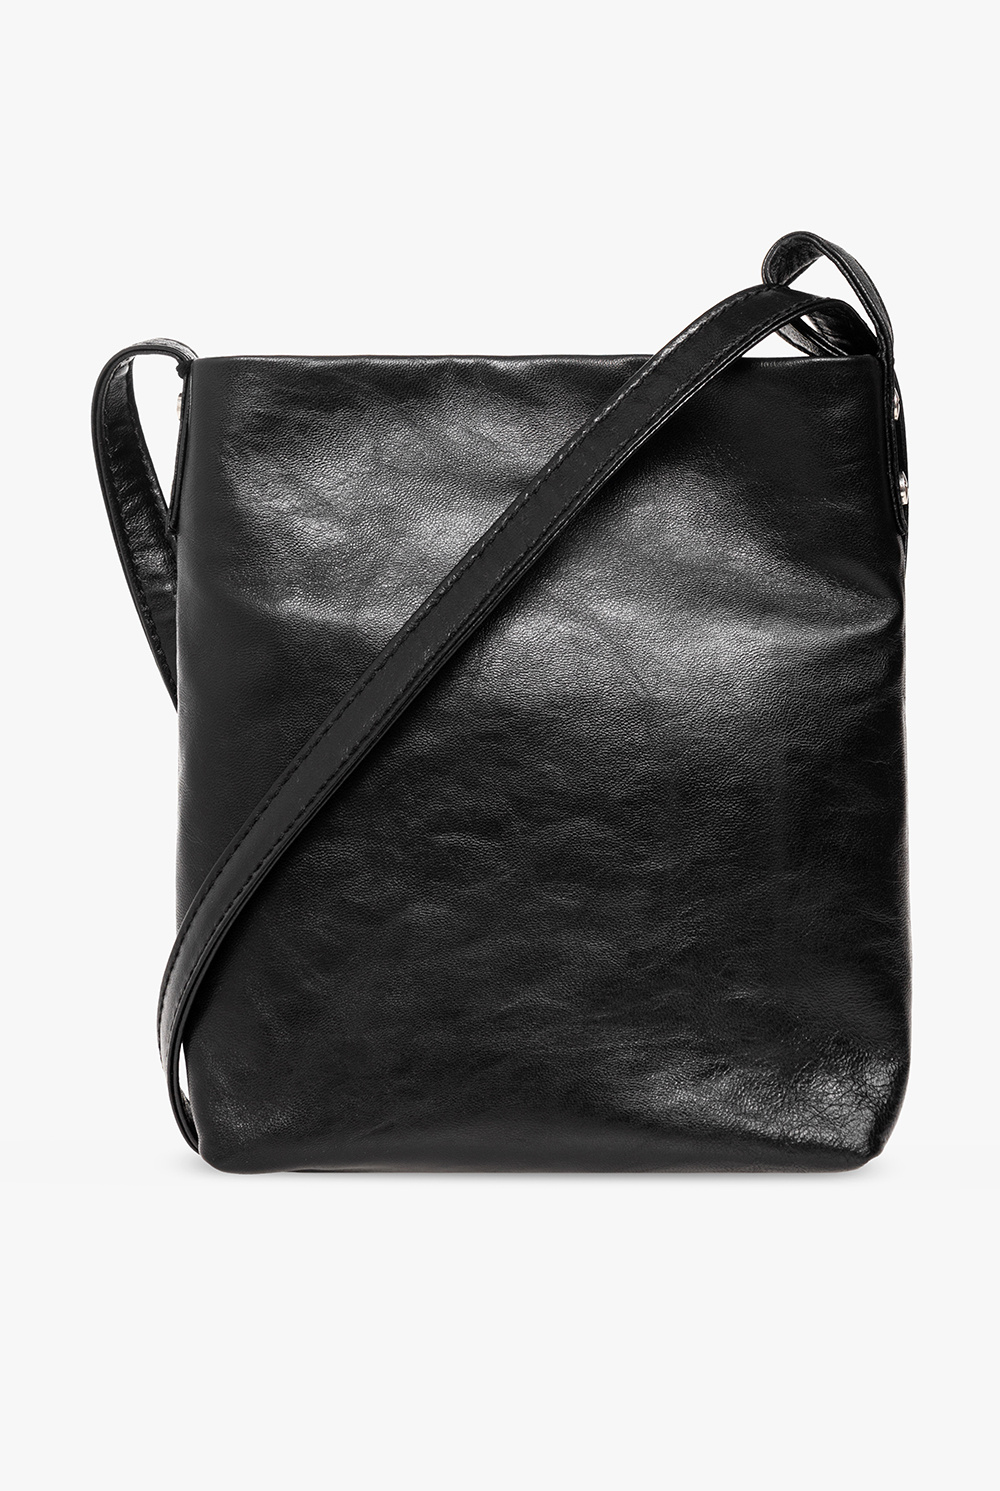 Ann Demeulemeester ‘ELisa Mini’ shoulder bag